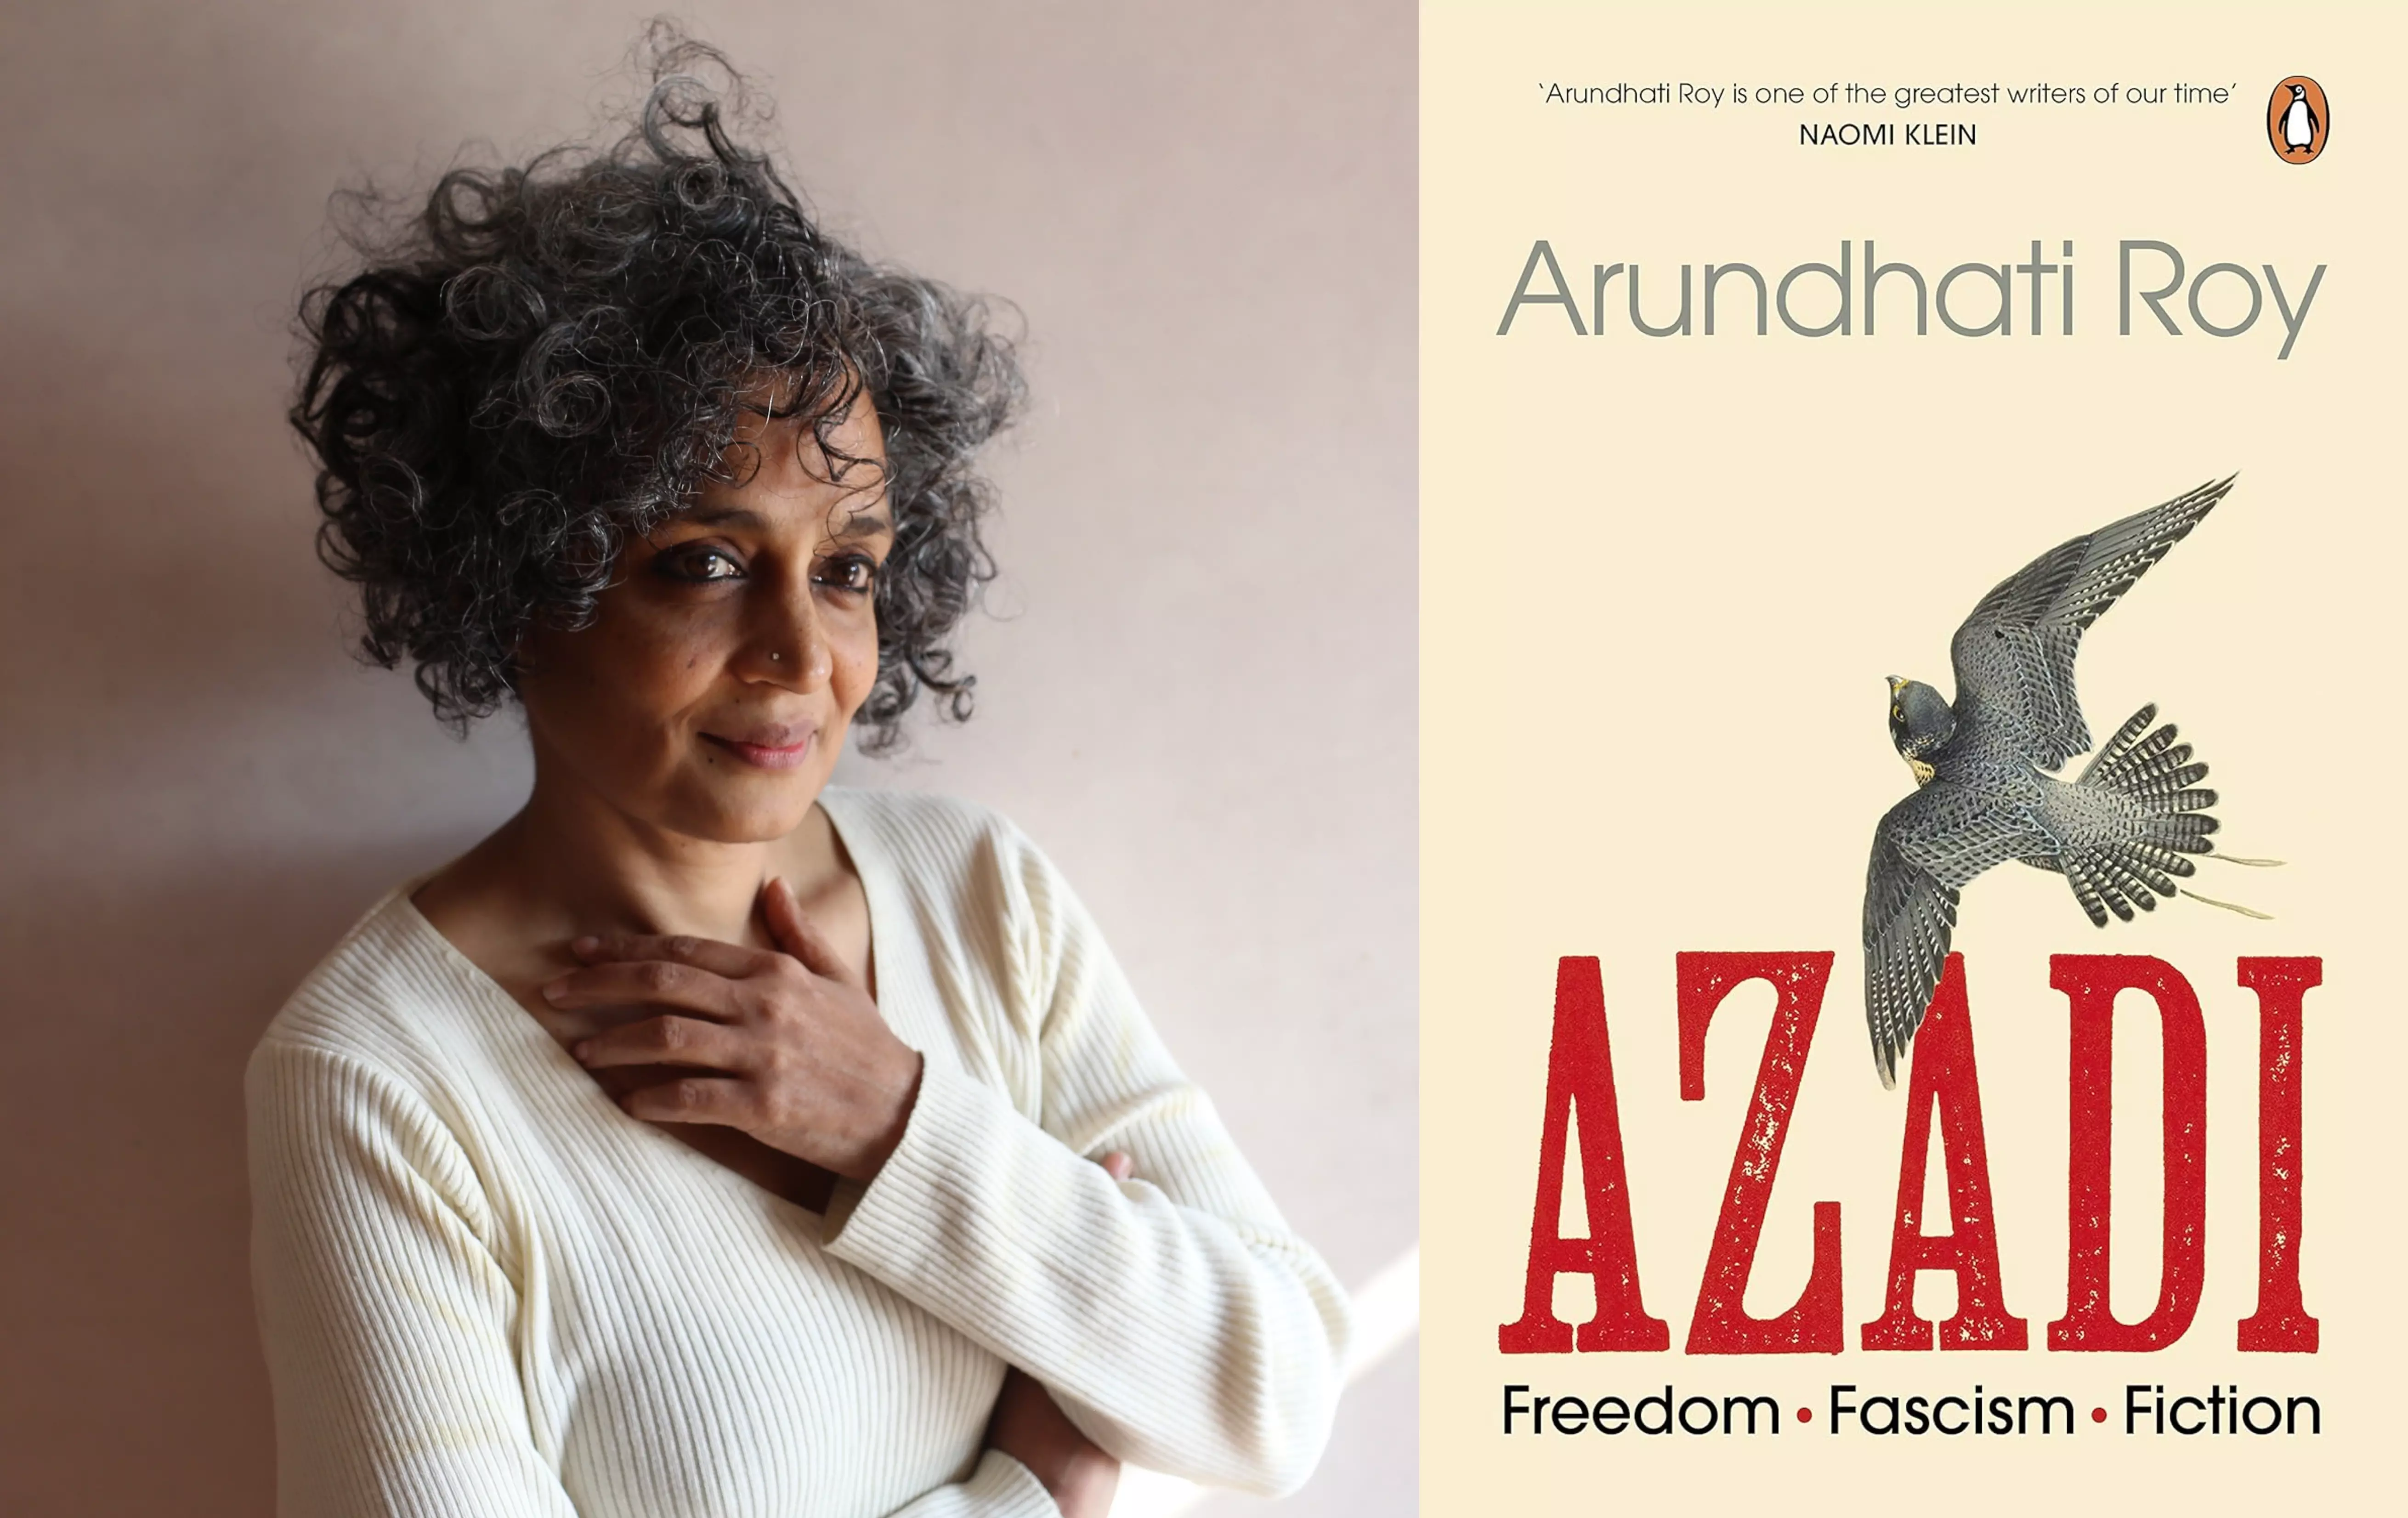 azadi essay by arundhati roy